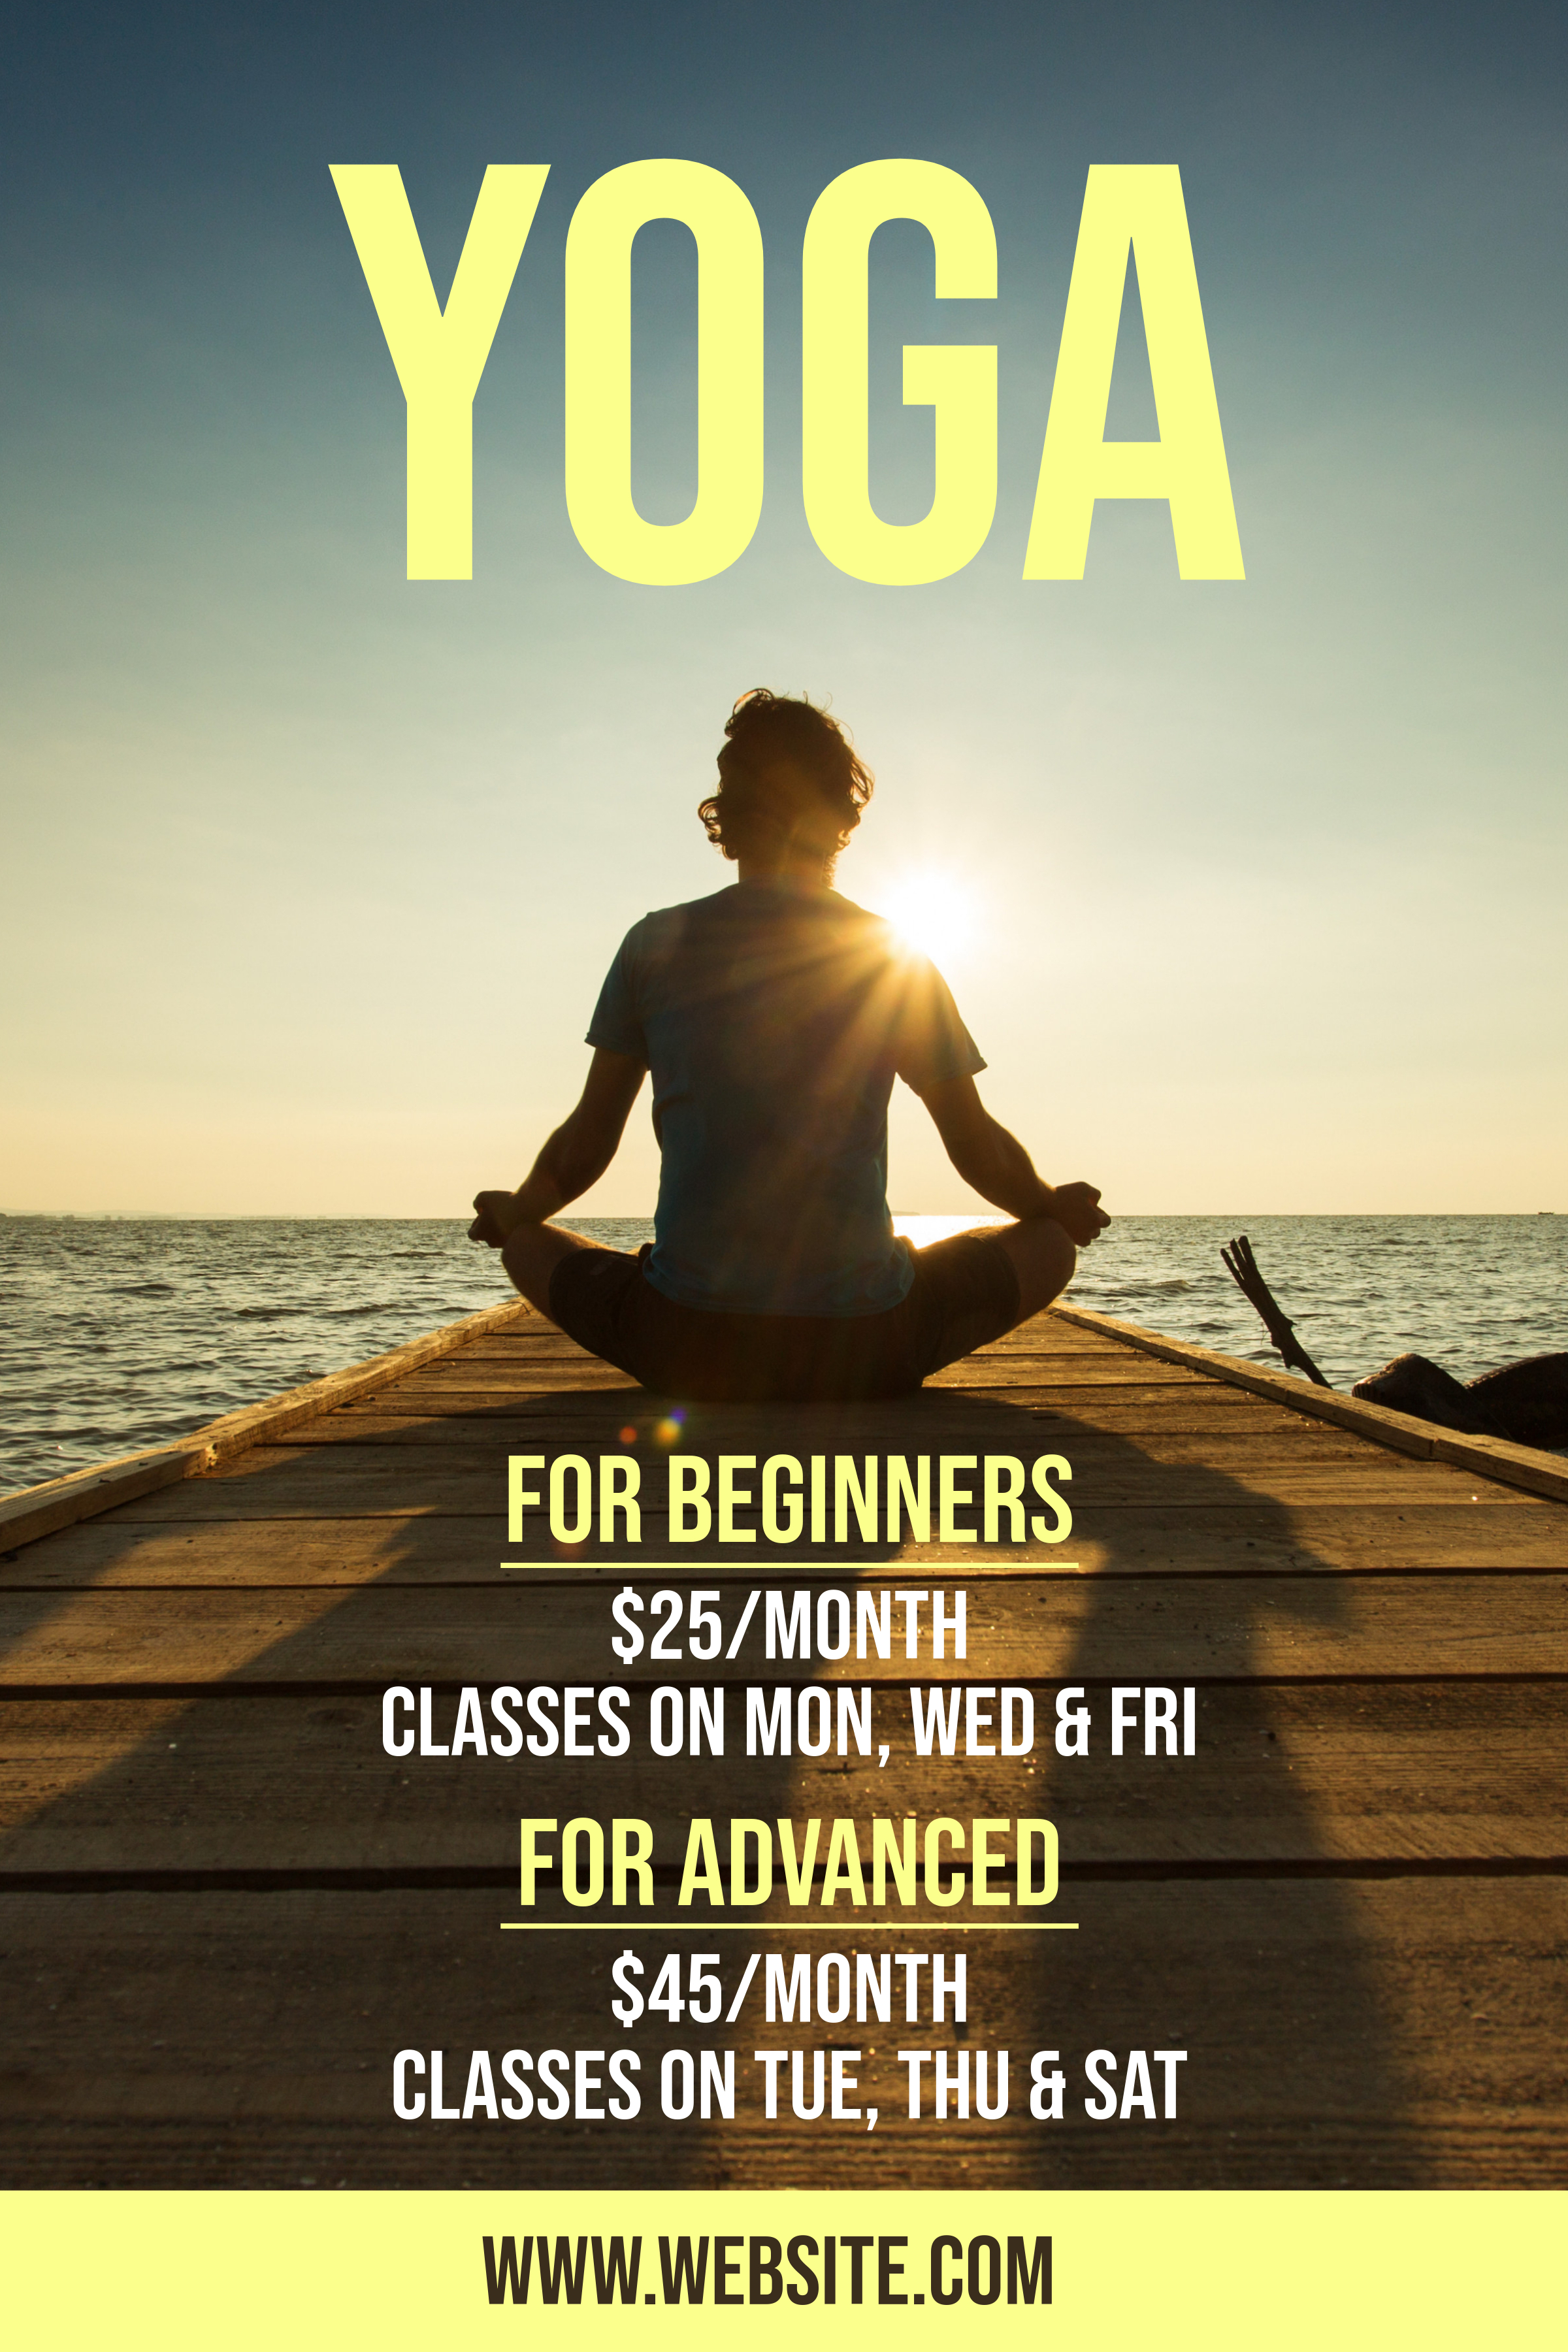 Yoga workshop poster template